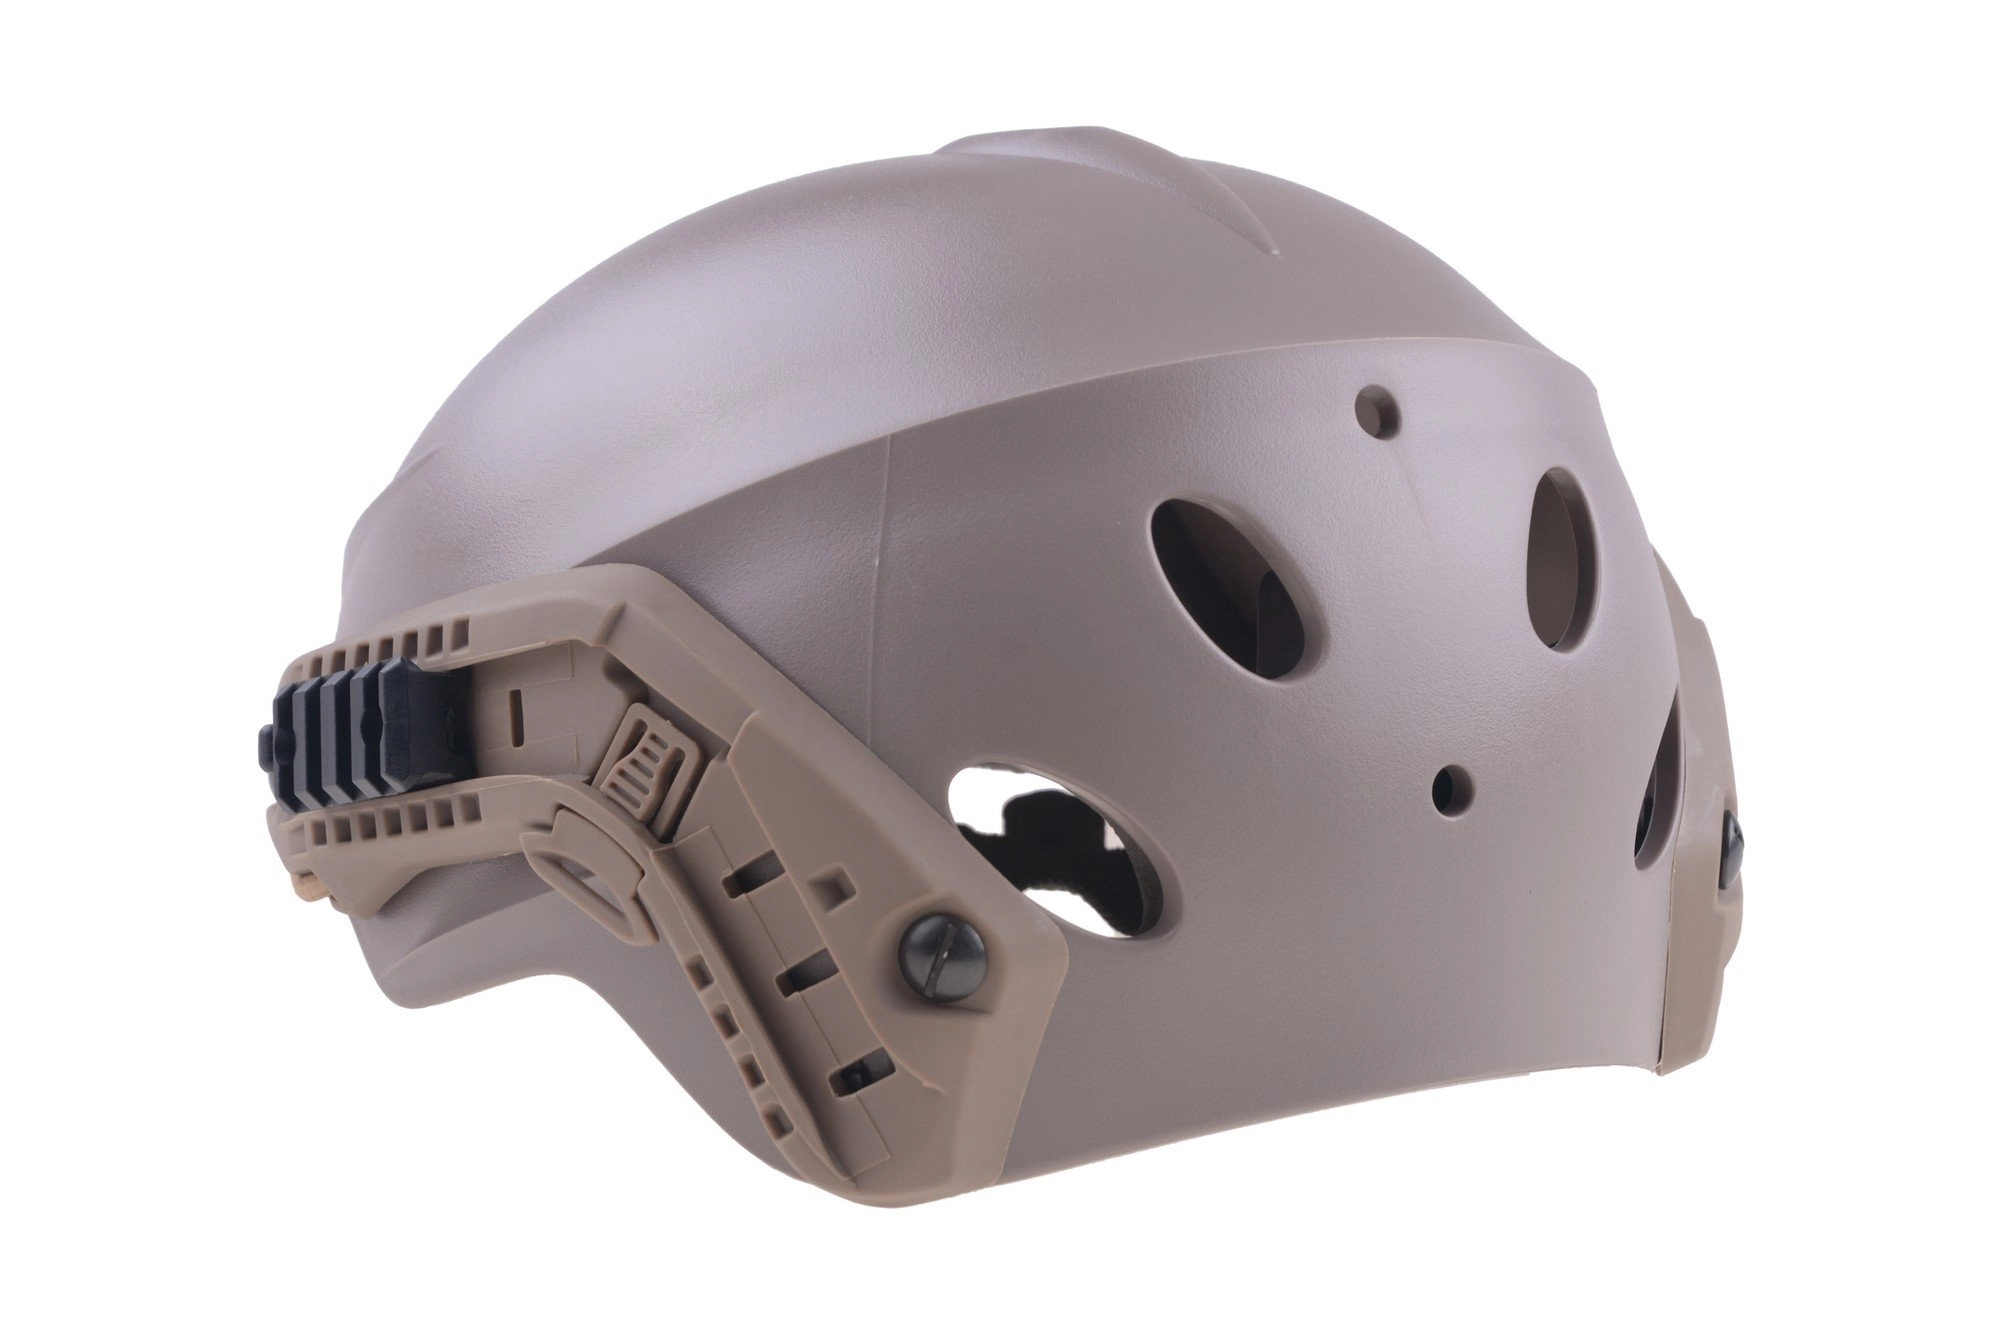 SFR helmet replica - Dark Earth